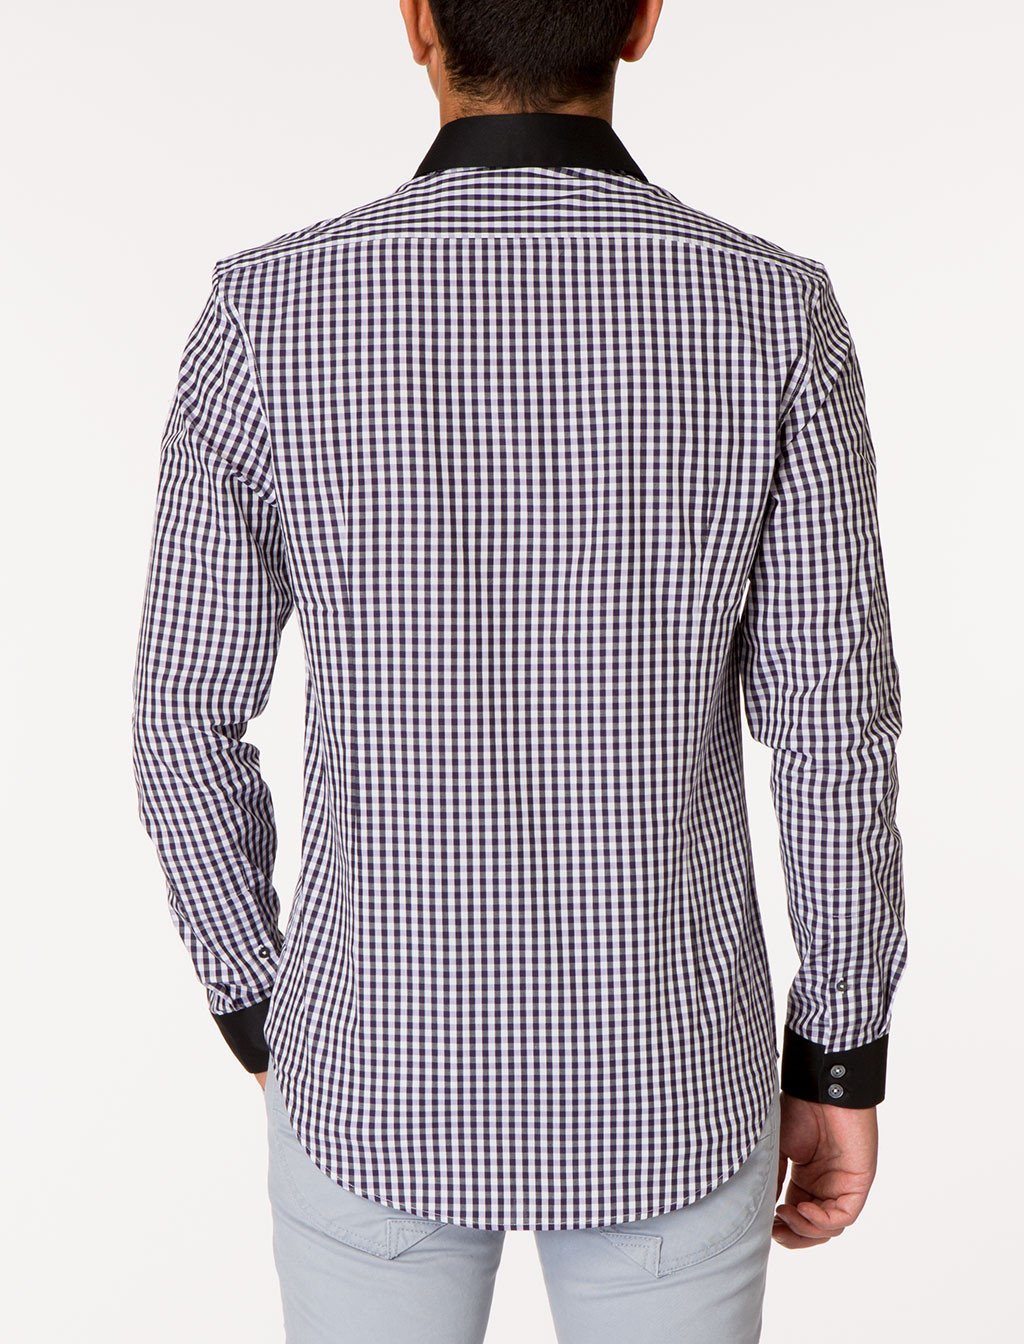 BINKS Classic Long Sleeve Woven Plaid Shirt